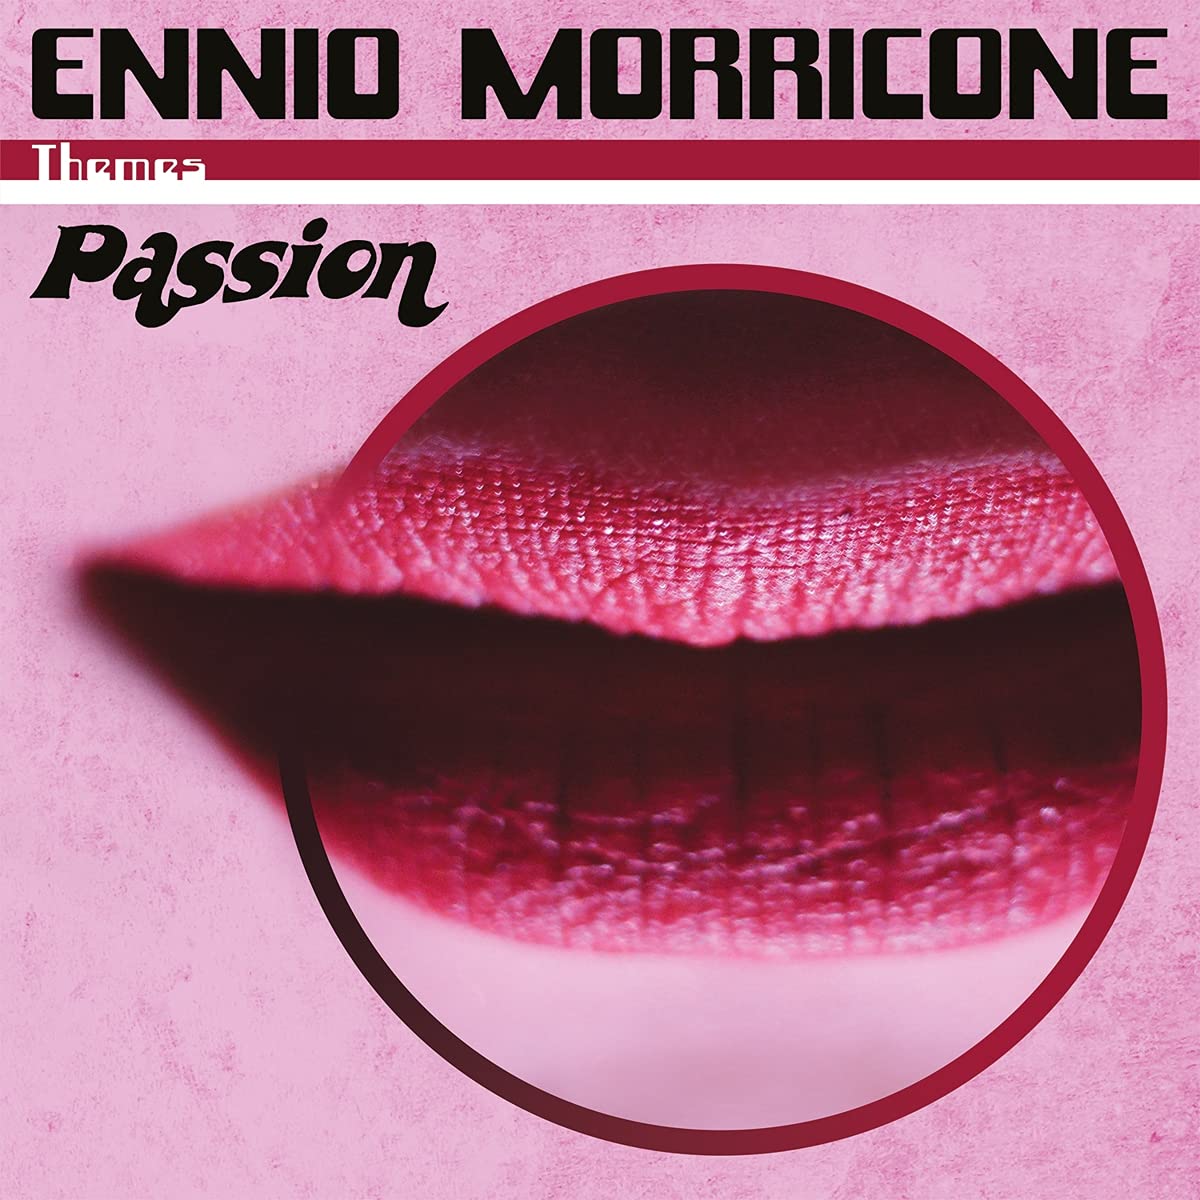 Ennio Morricone - Themes: Passion [Import]